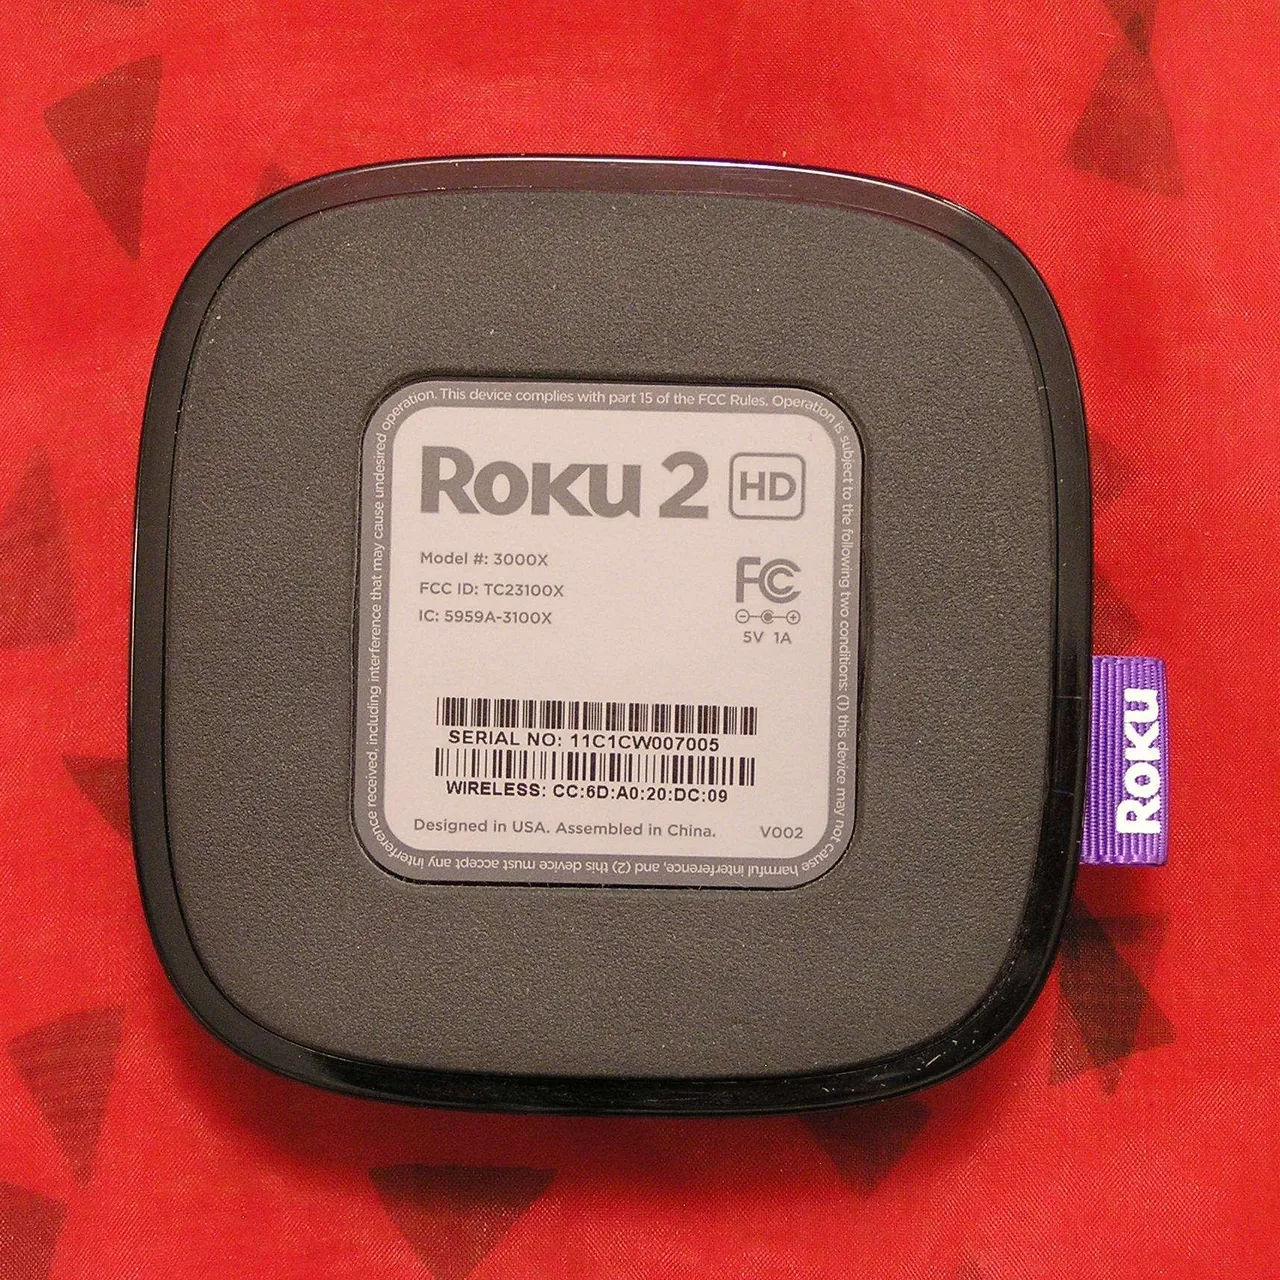 Roku 2 HD online media player photo 1